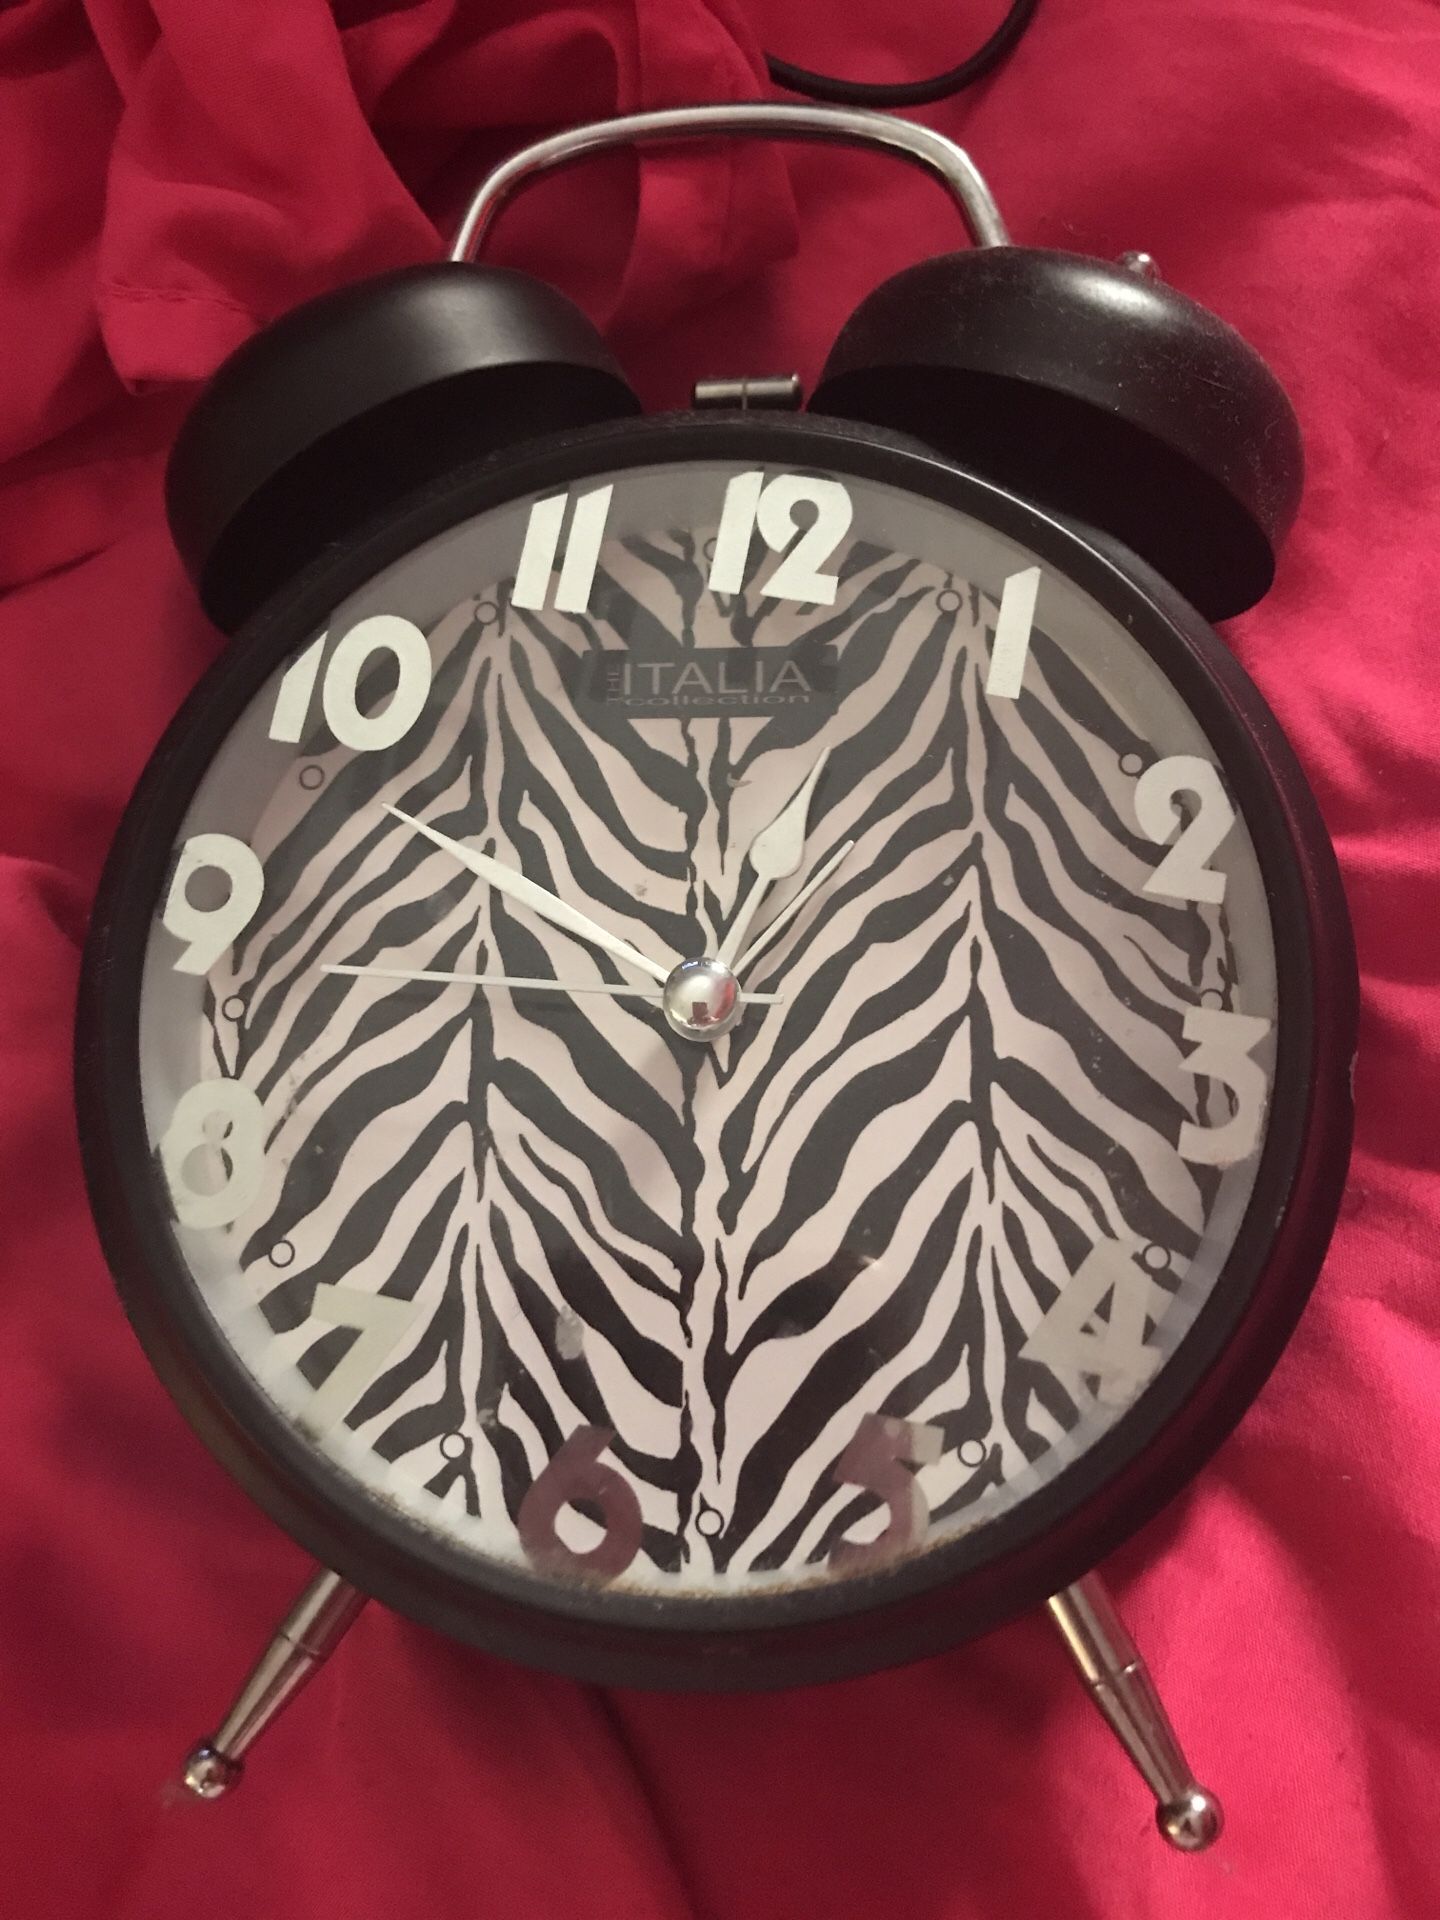 Zebra alarm clock